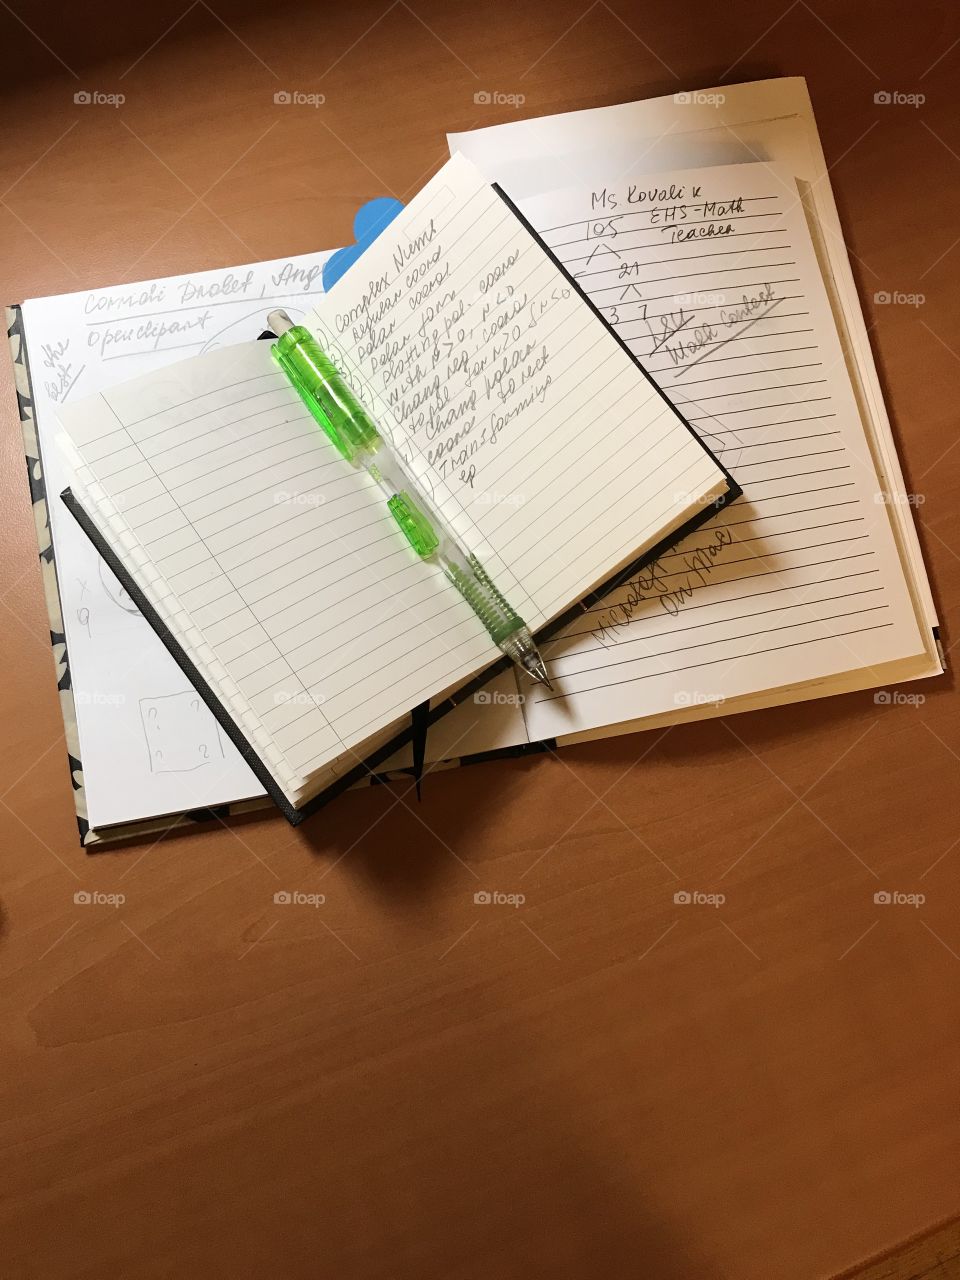 Working notebooks